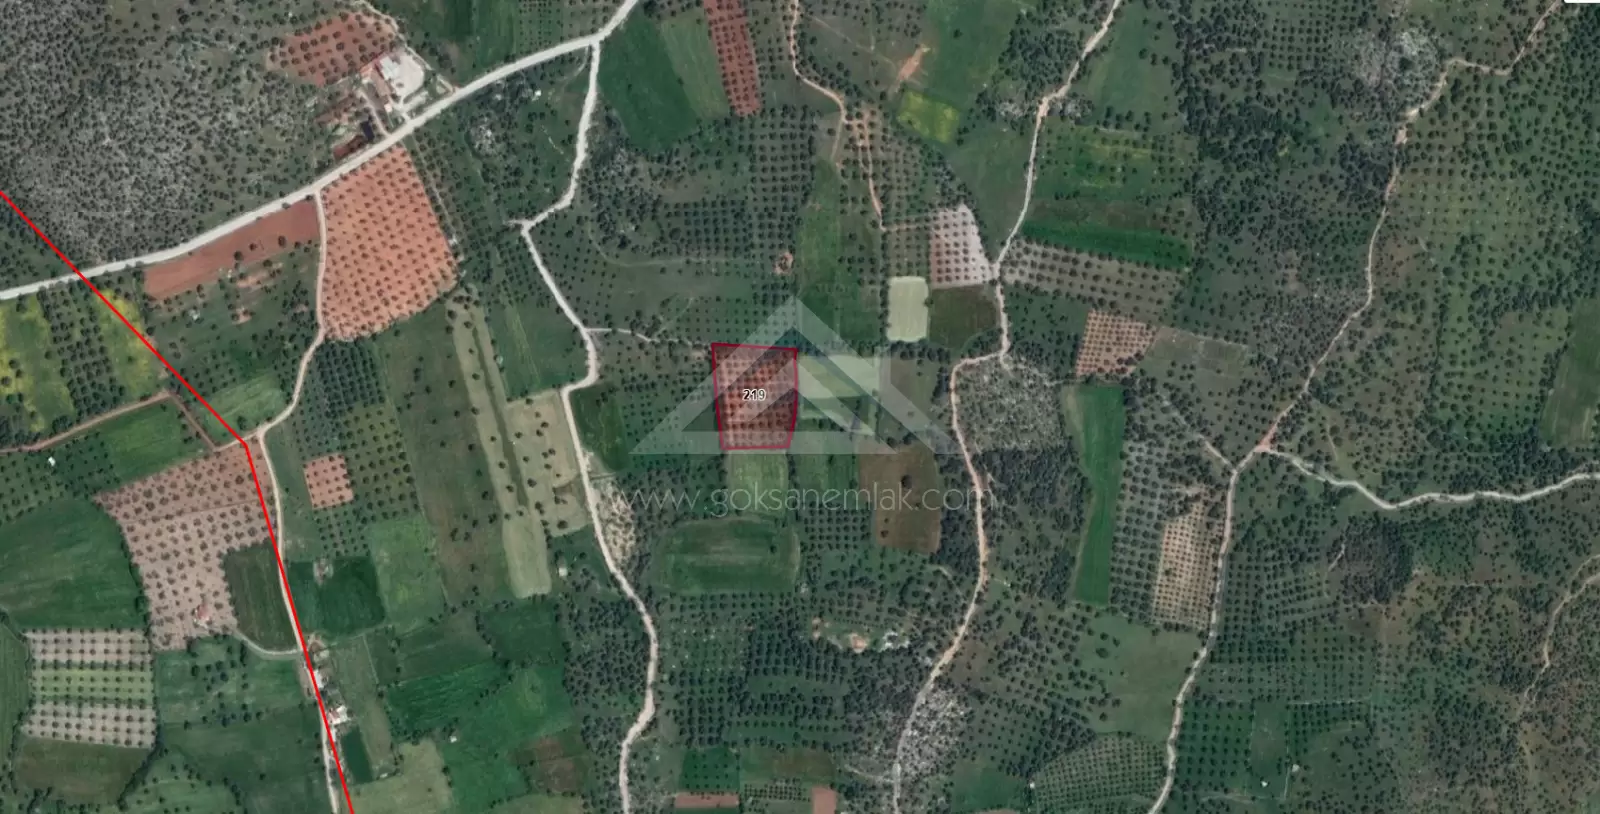 7.850 Sqm Land For Sale İn Kazıklı Bay With More Then 100 Olives